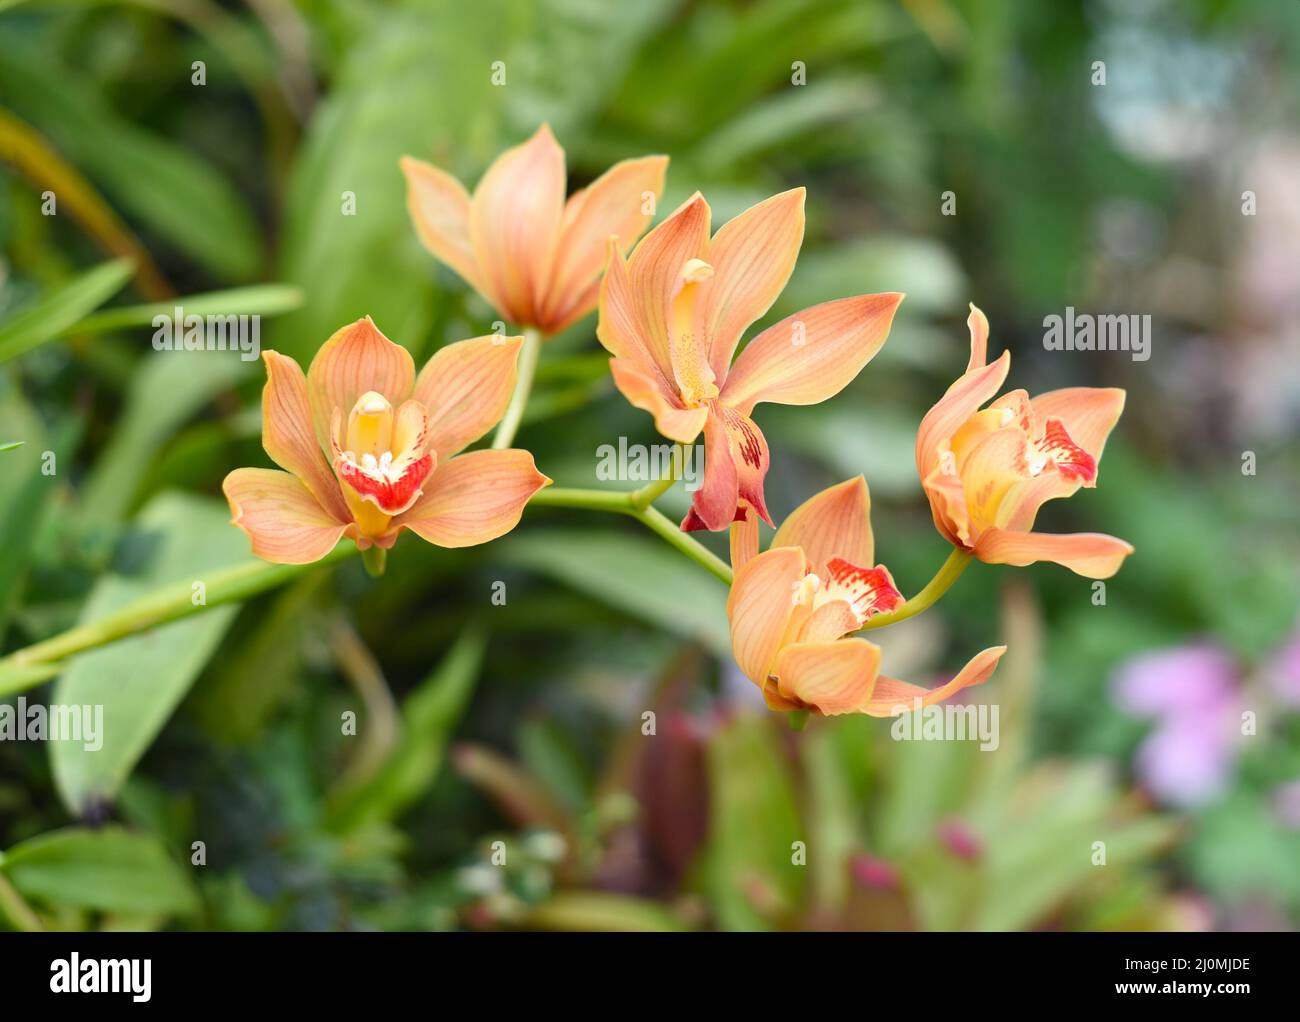 Cymbidium orchid flowers close up Stock Photo